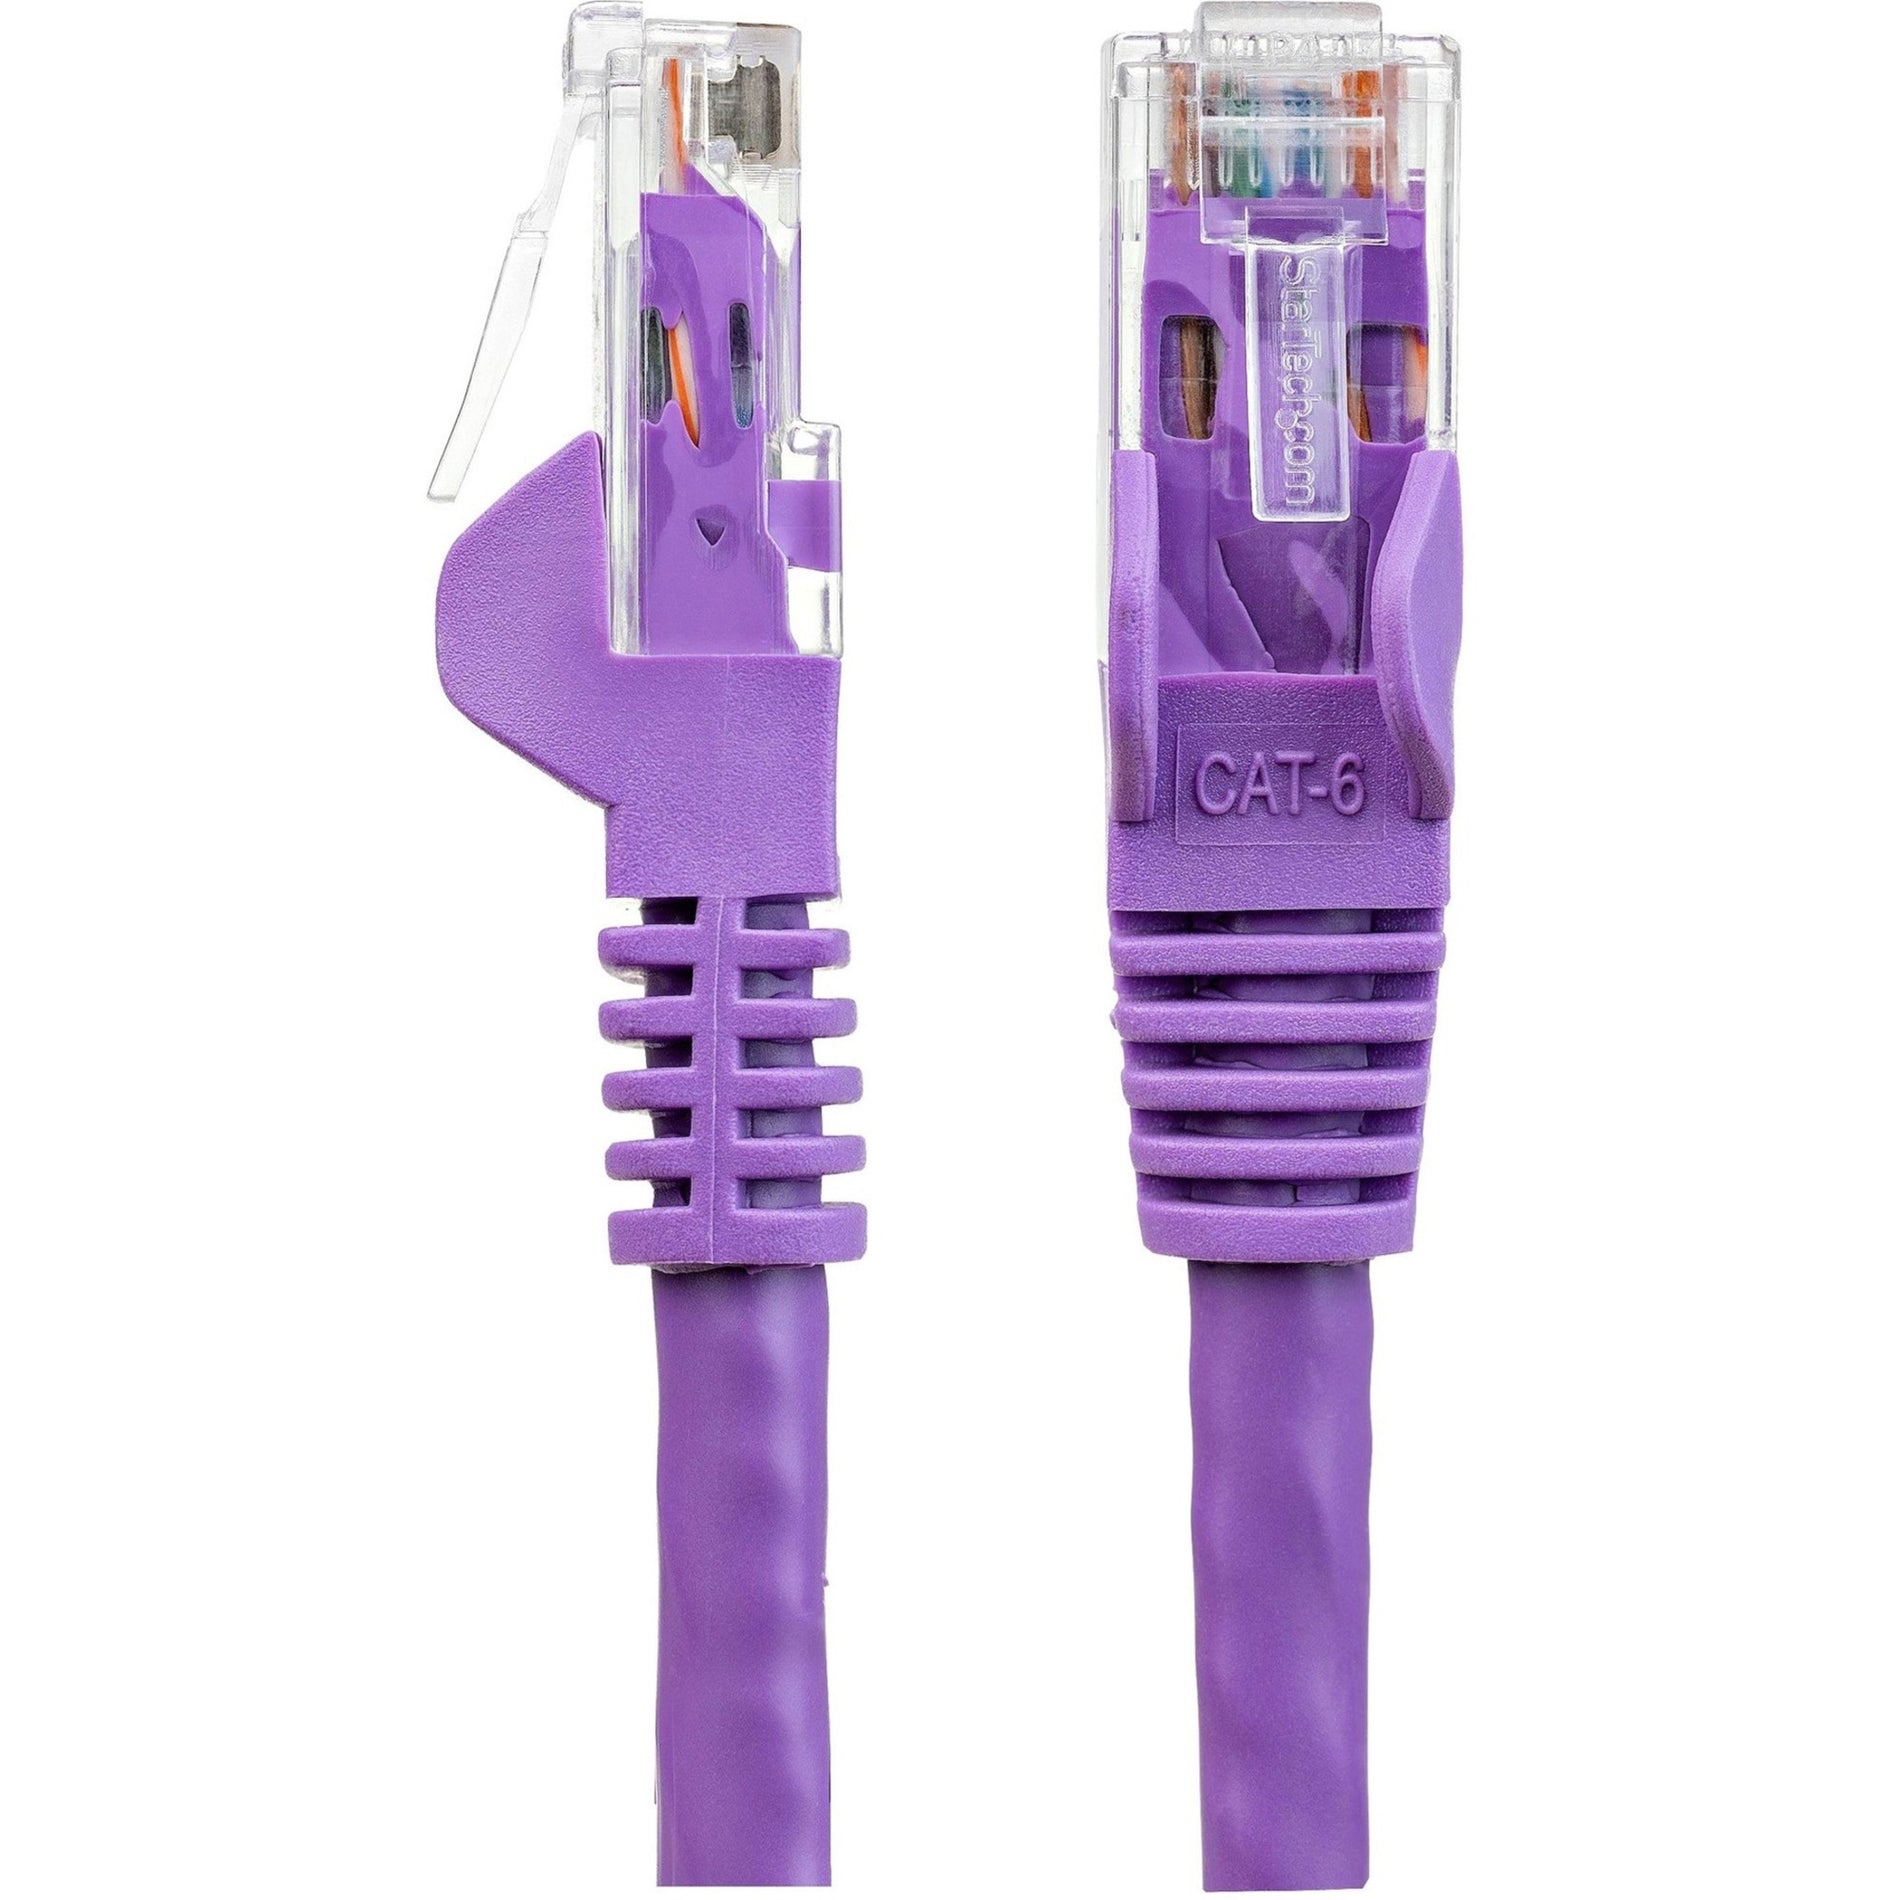 StarTech.com N6PATCH6INPL Cat6 Patch Cable, 6in Purple Ethernet Cable, Snagless RJ45 Connectors